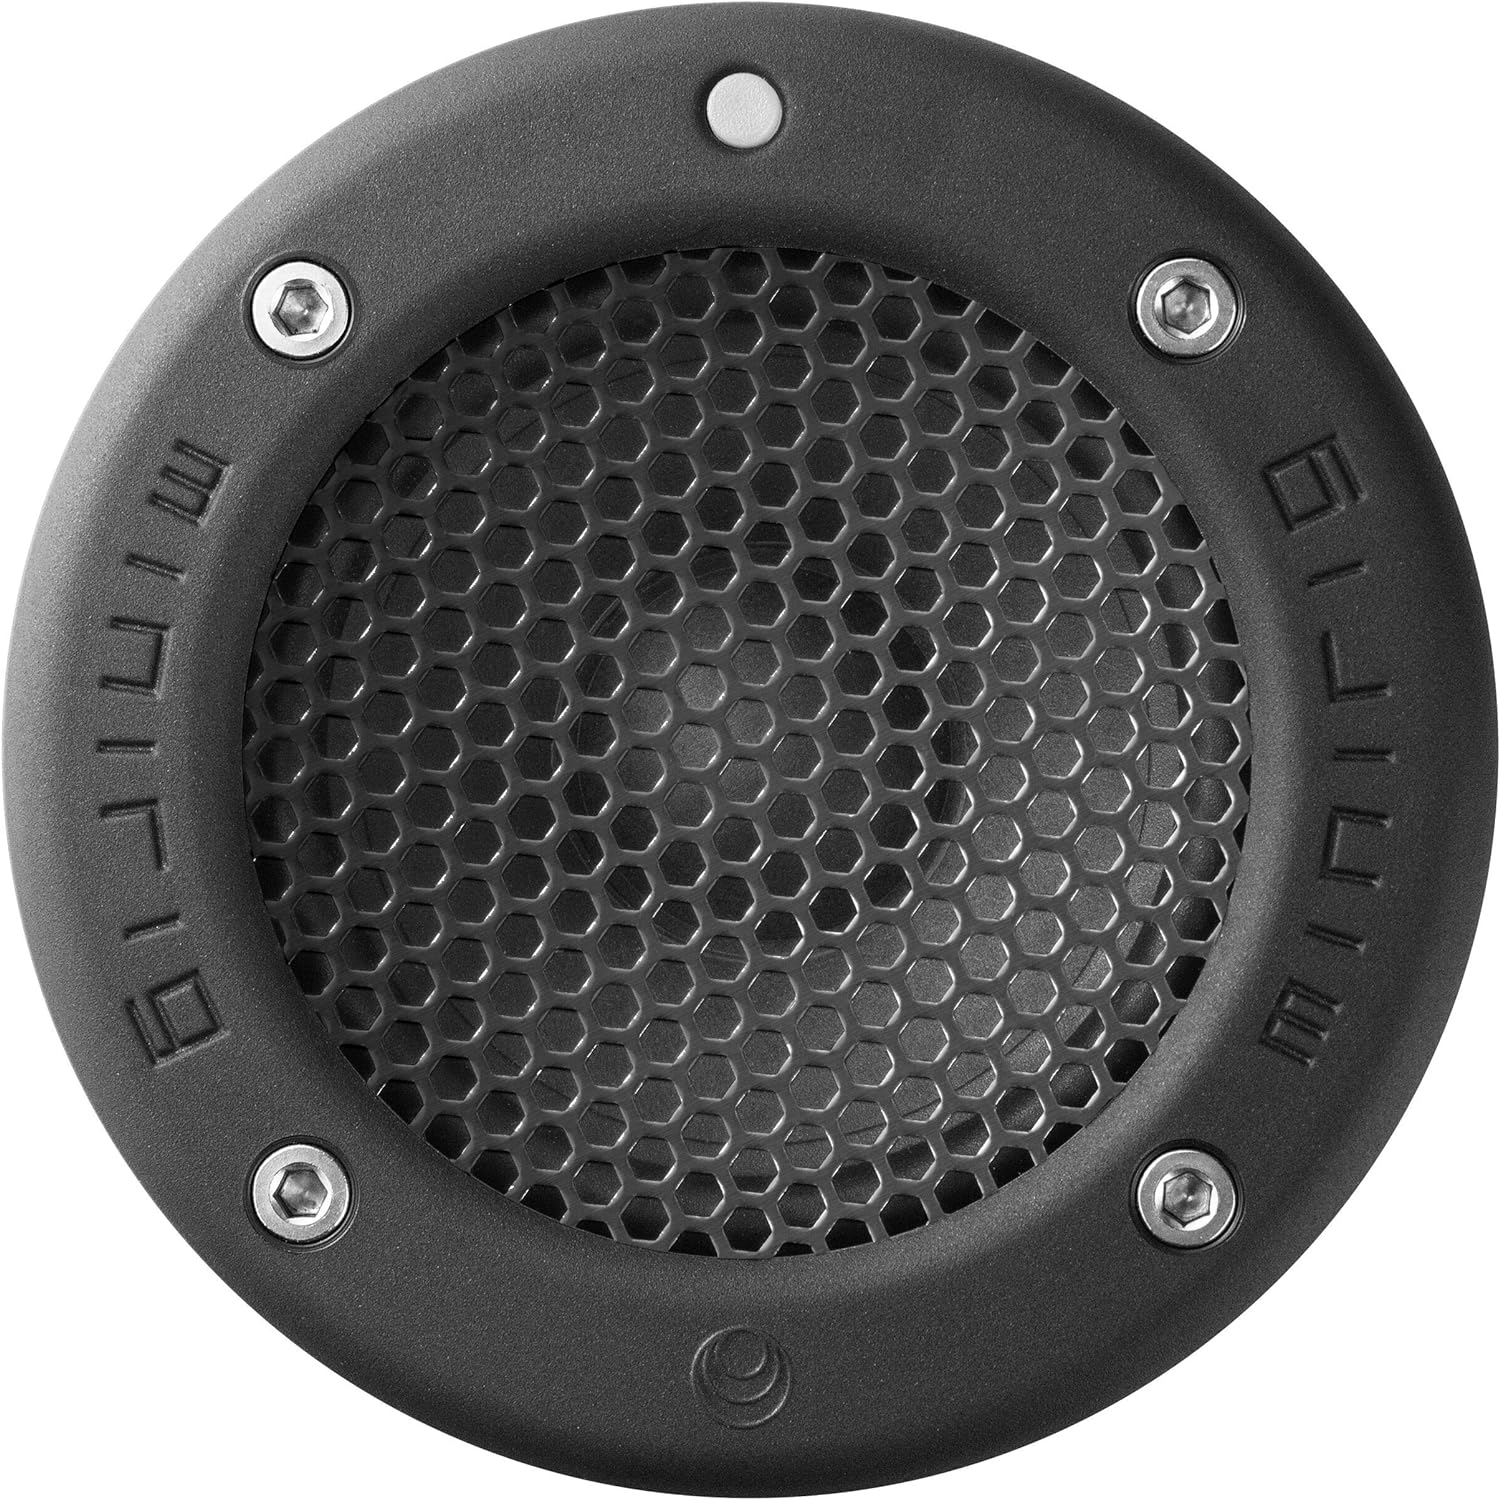 MINIRIG 3 Portable Rechargeable Bluetooth Speaker - 100 Hour Battery - Loud Hi-Fi Sound - Black - 100093